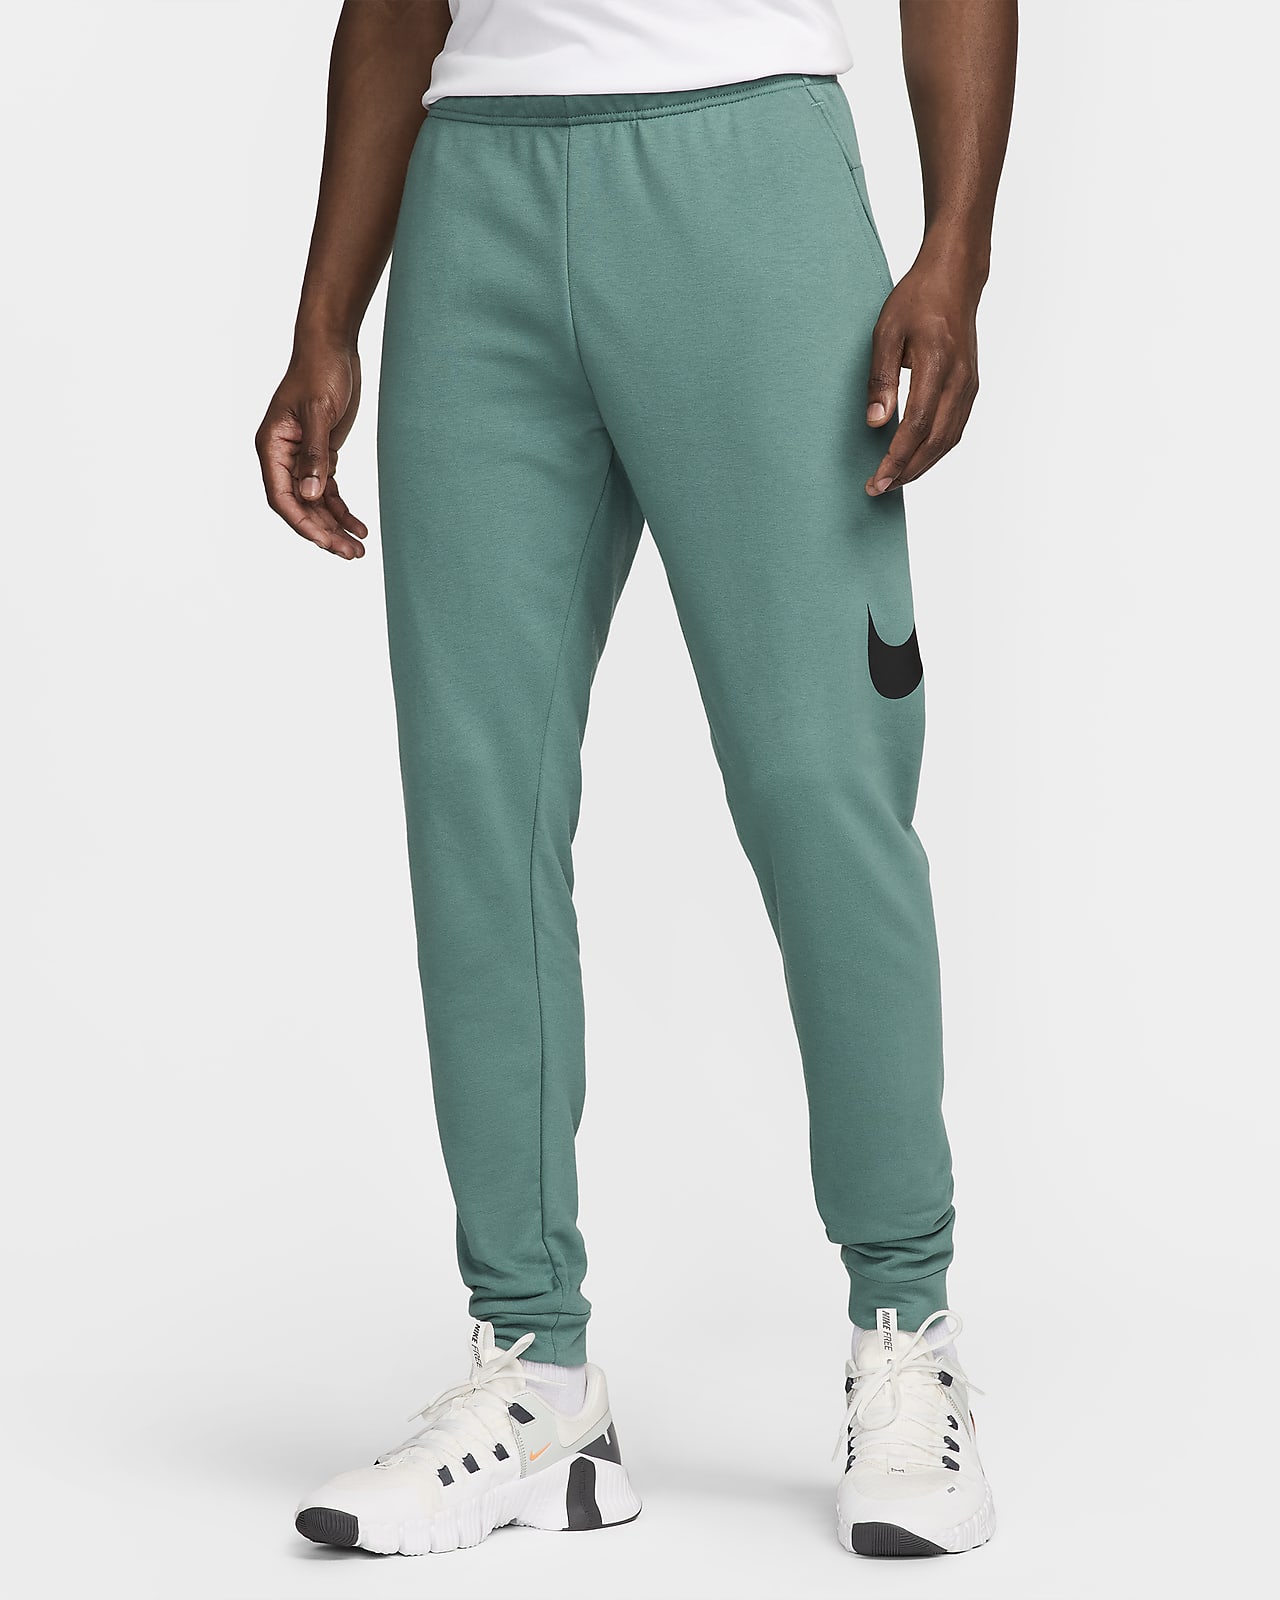 Nike Dry Graphic Men's Dri-FIT Taper Fitness Trousers